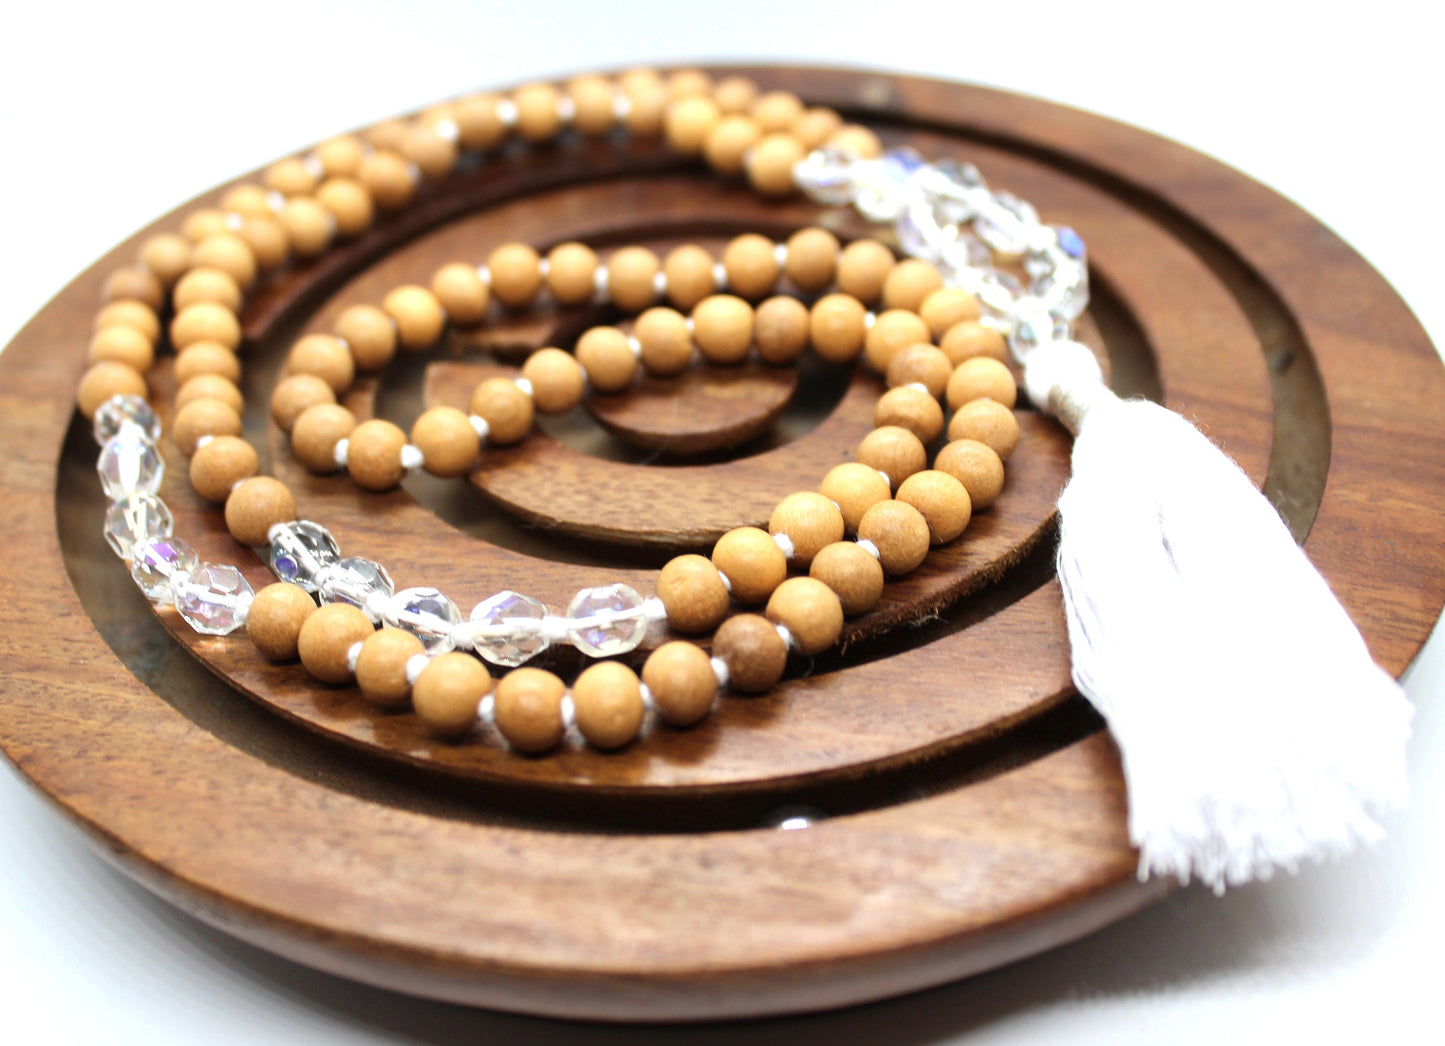 Sandalwood mala 6mm, 108 beads rosary, sandalwood japa with diamond cut fire glass beads necklace, hindu meditation buddhist prayer beads